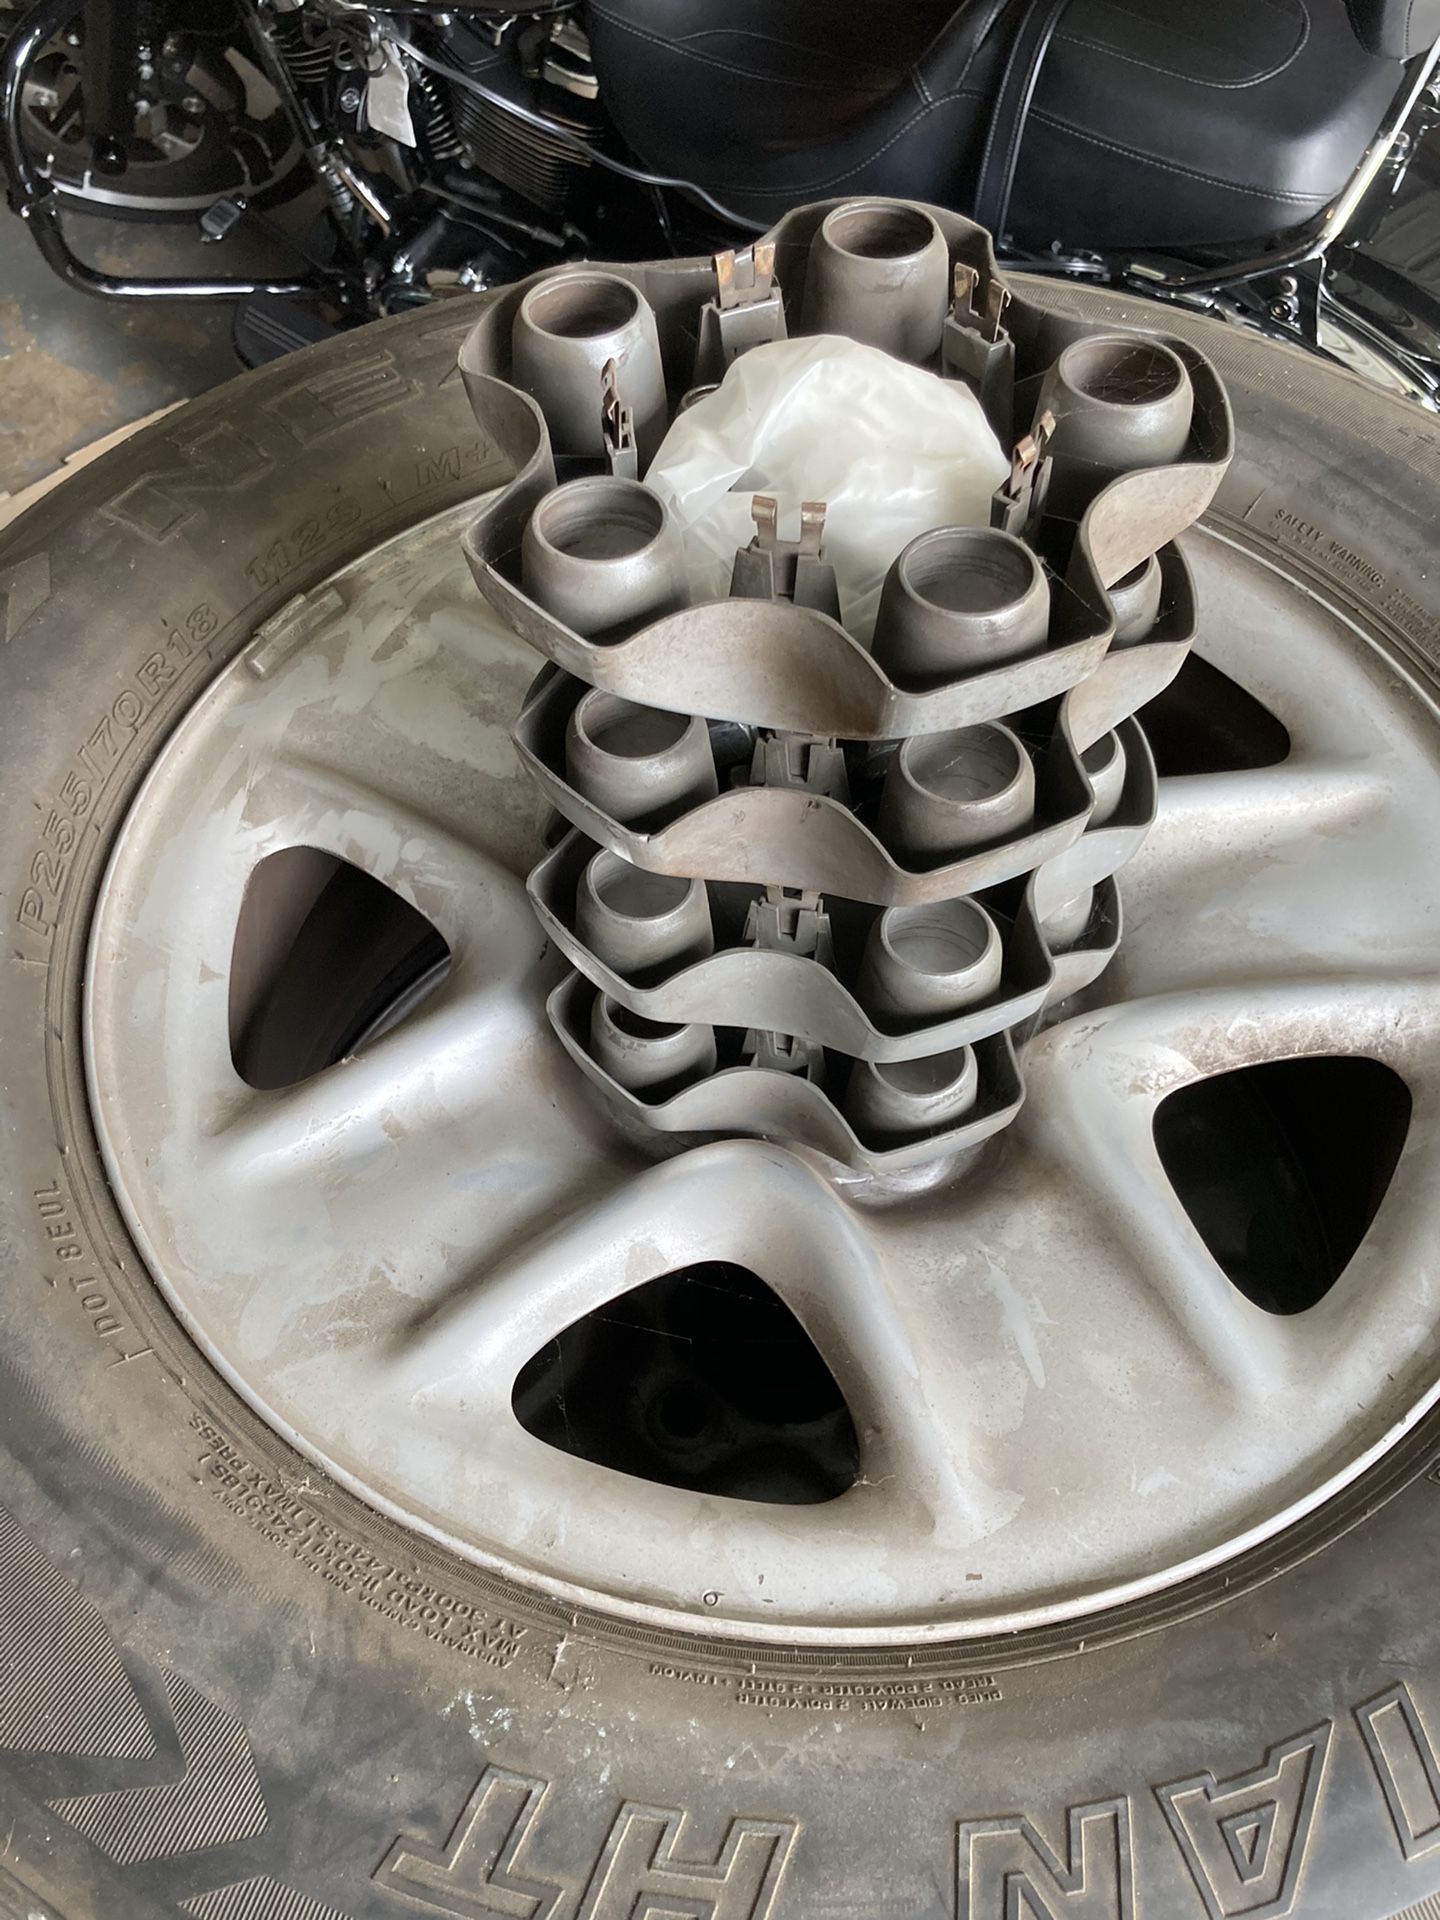 Toyota Tundra Tires